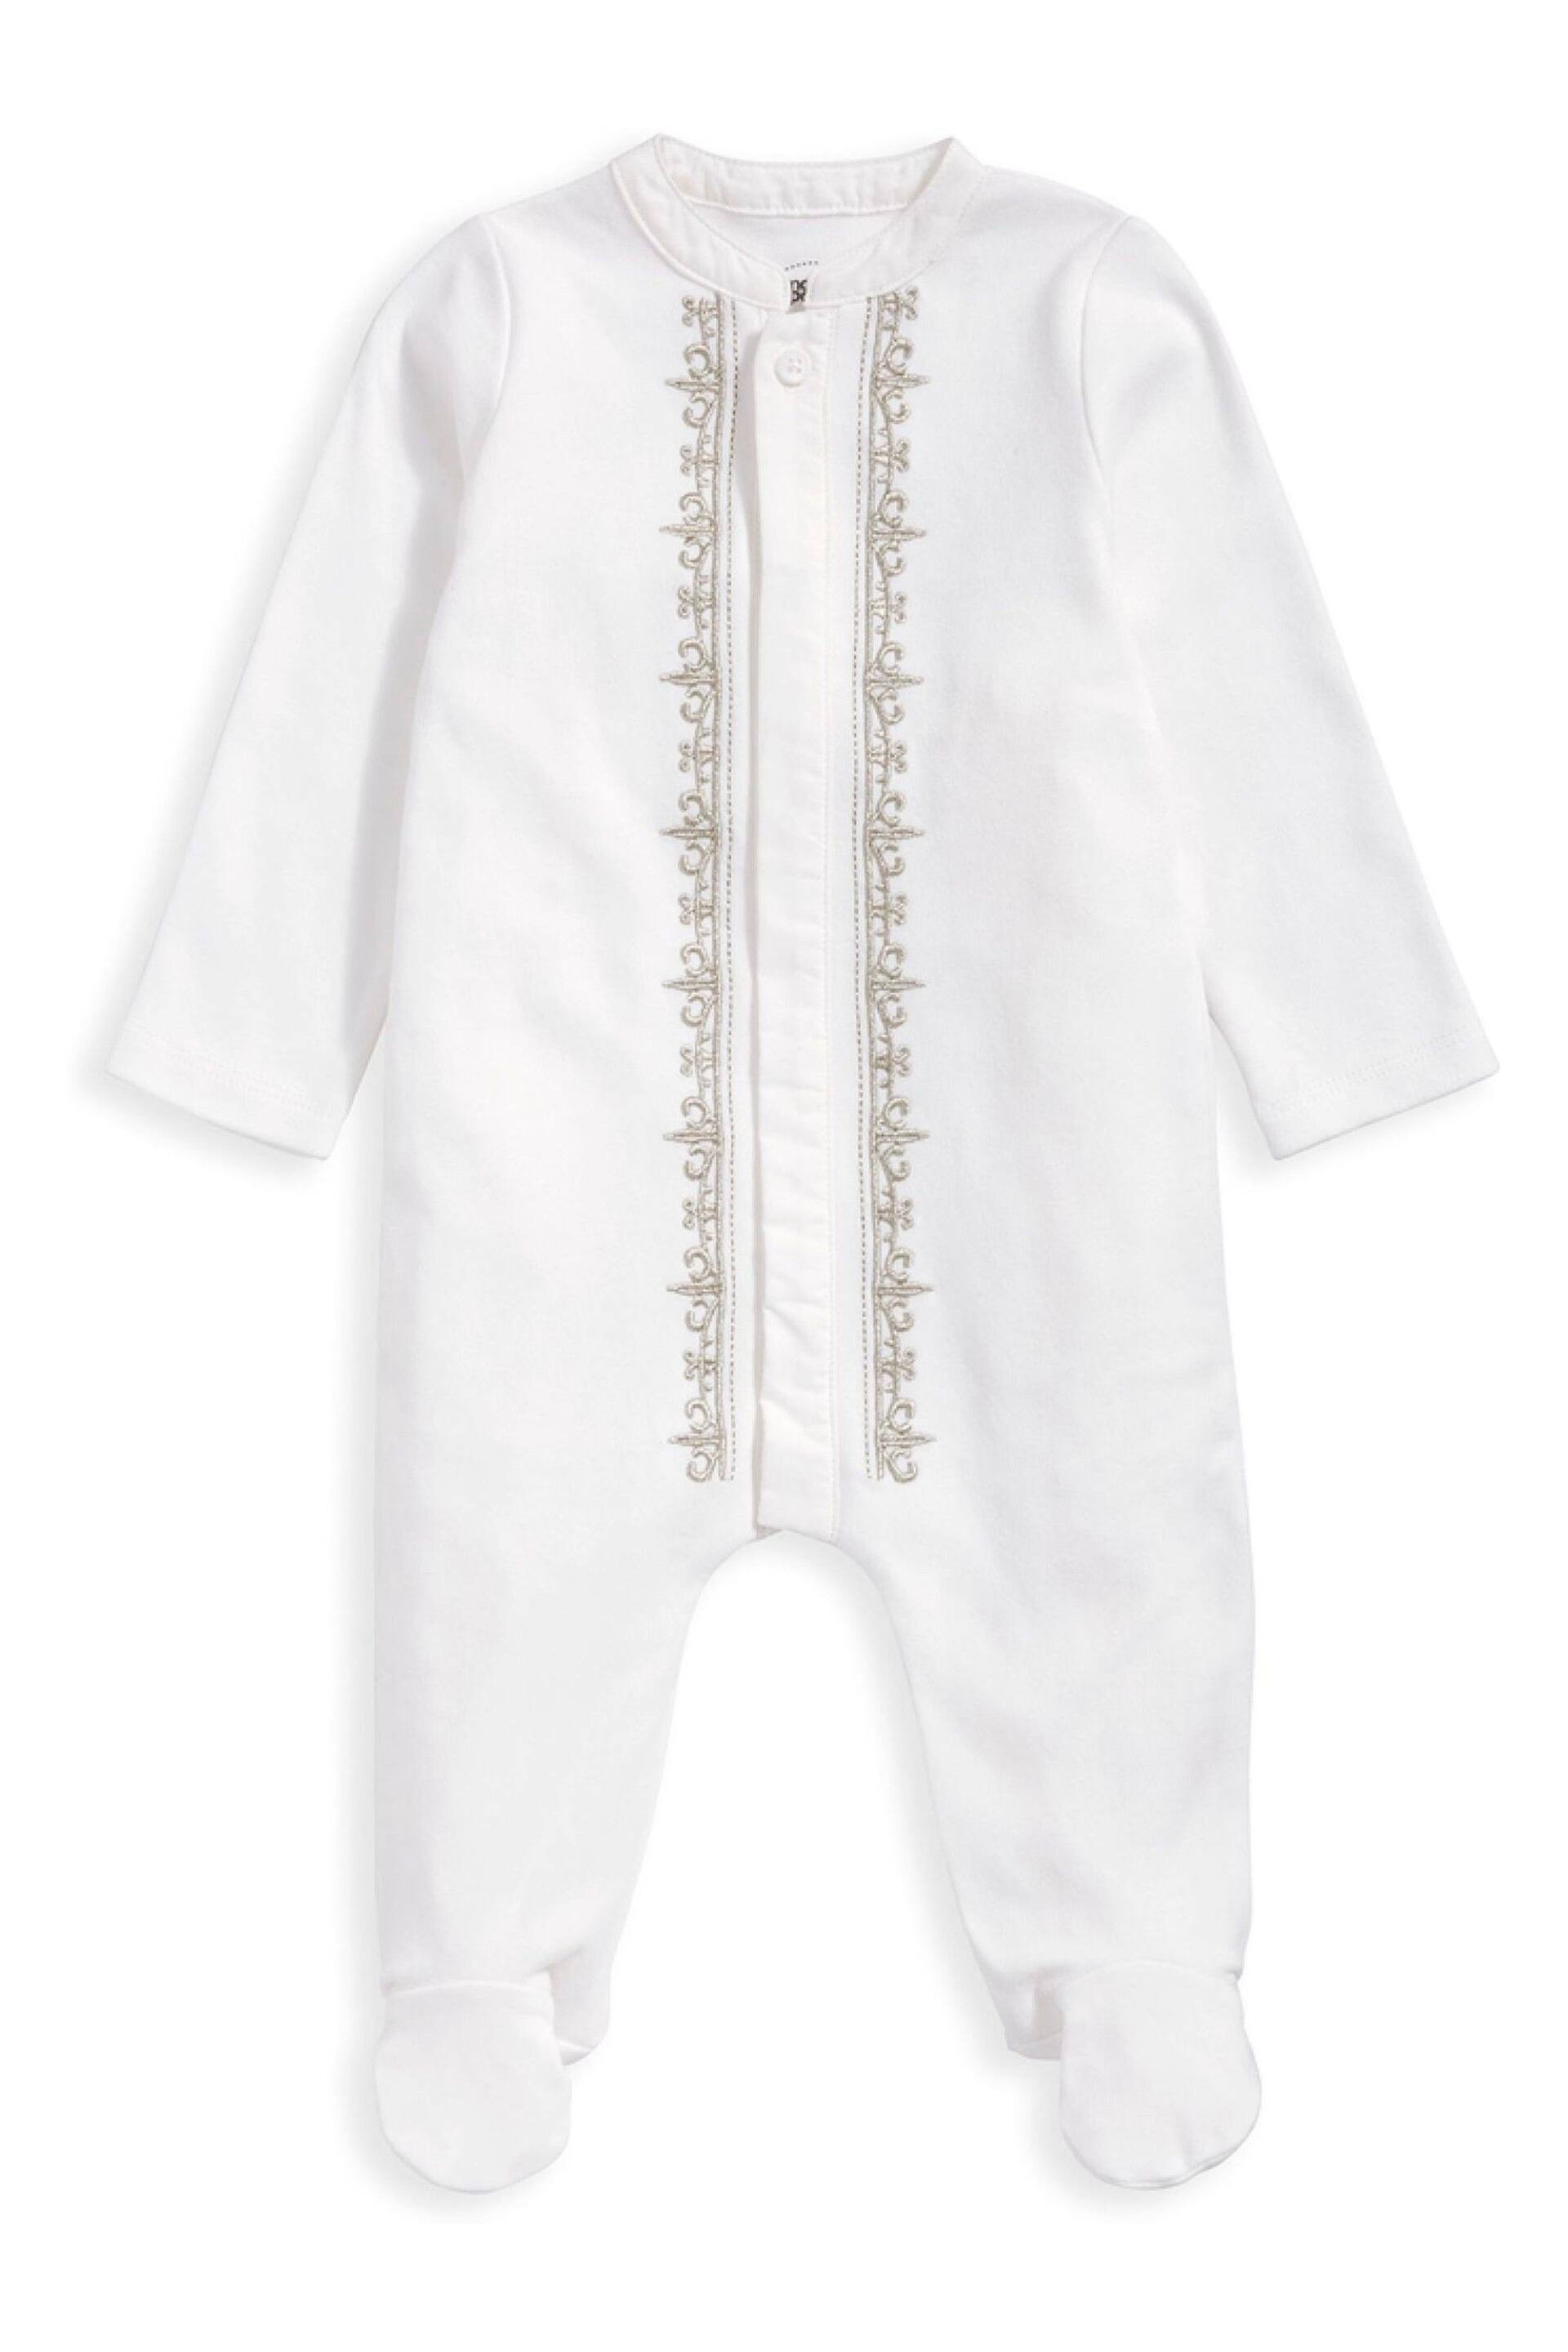 Mamas & Papas Boys White Embroidered Eid Sleepsuit - Image 2 of 3